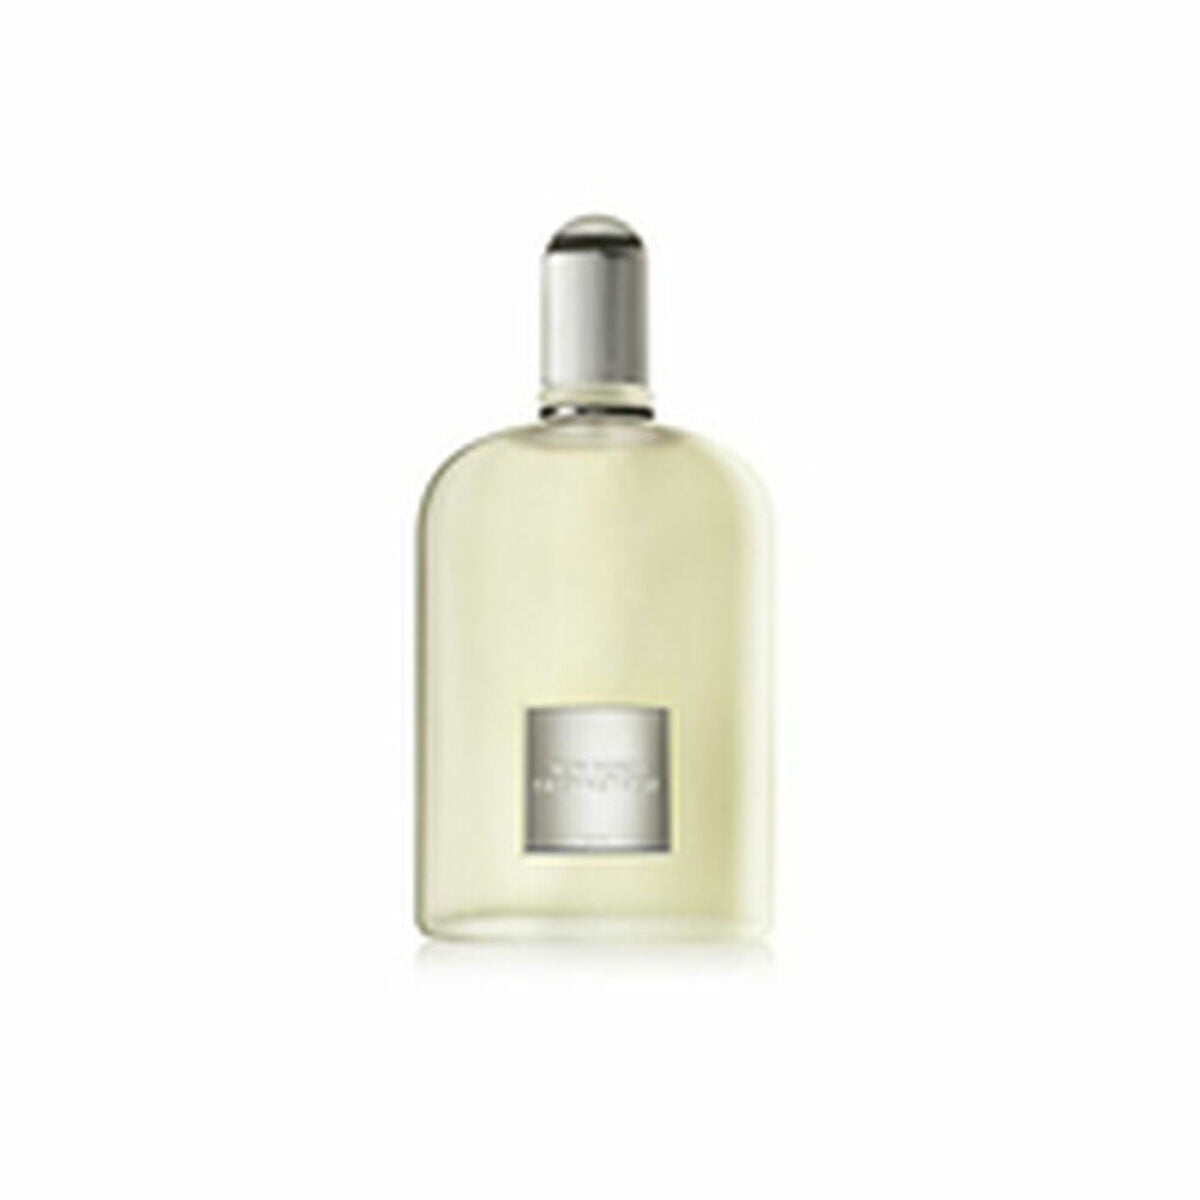 Men's Perfume Tom Ford Grey Vetiver (100 ml)